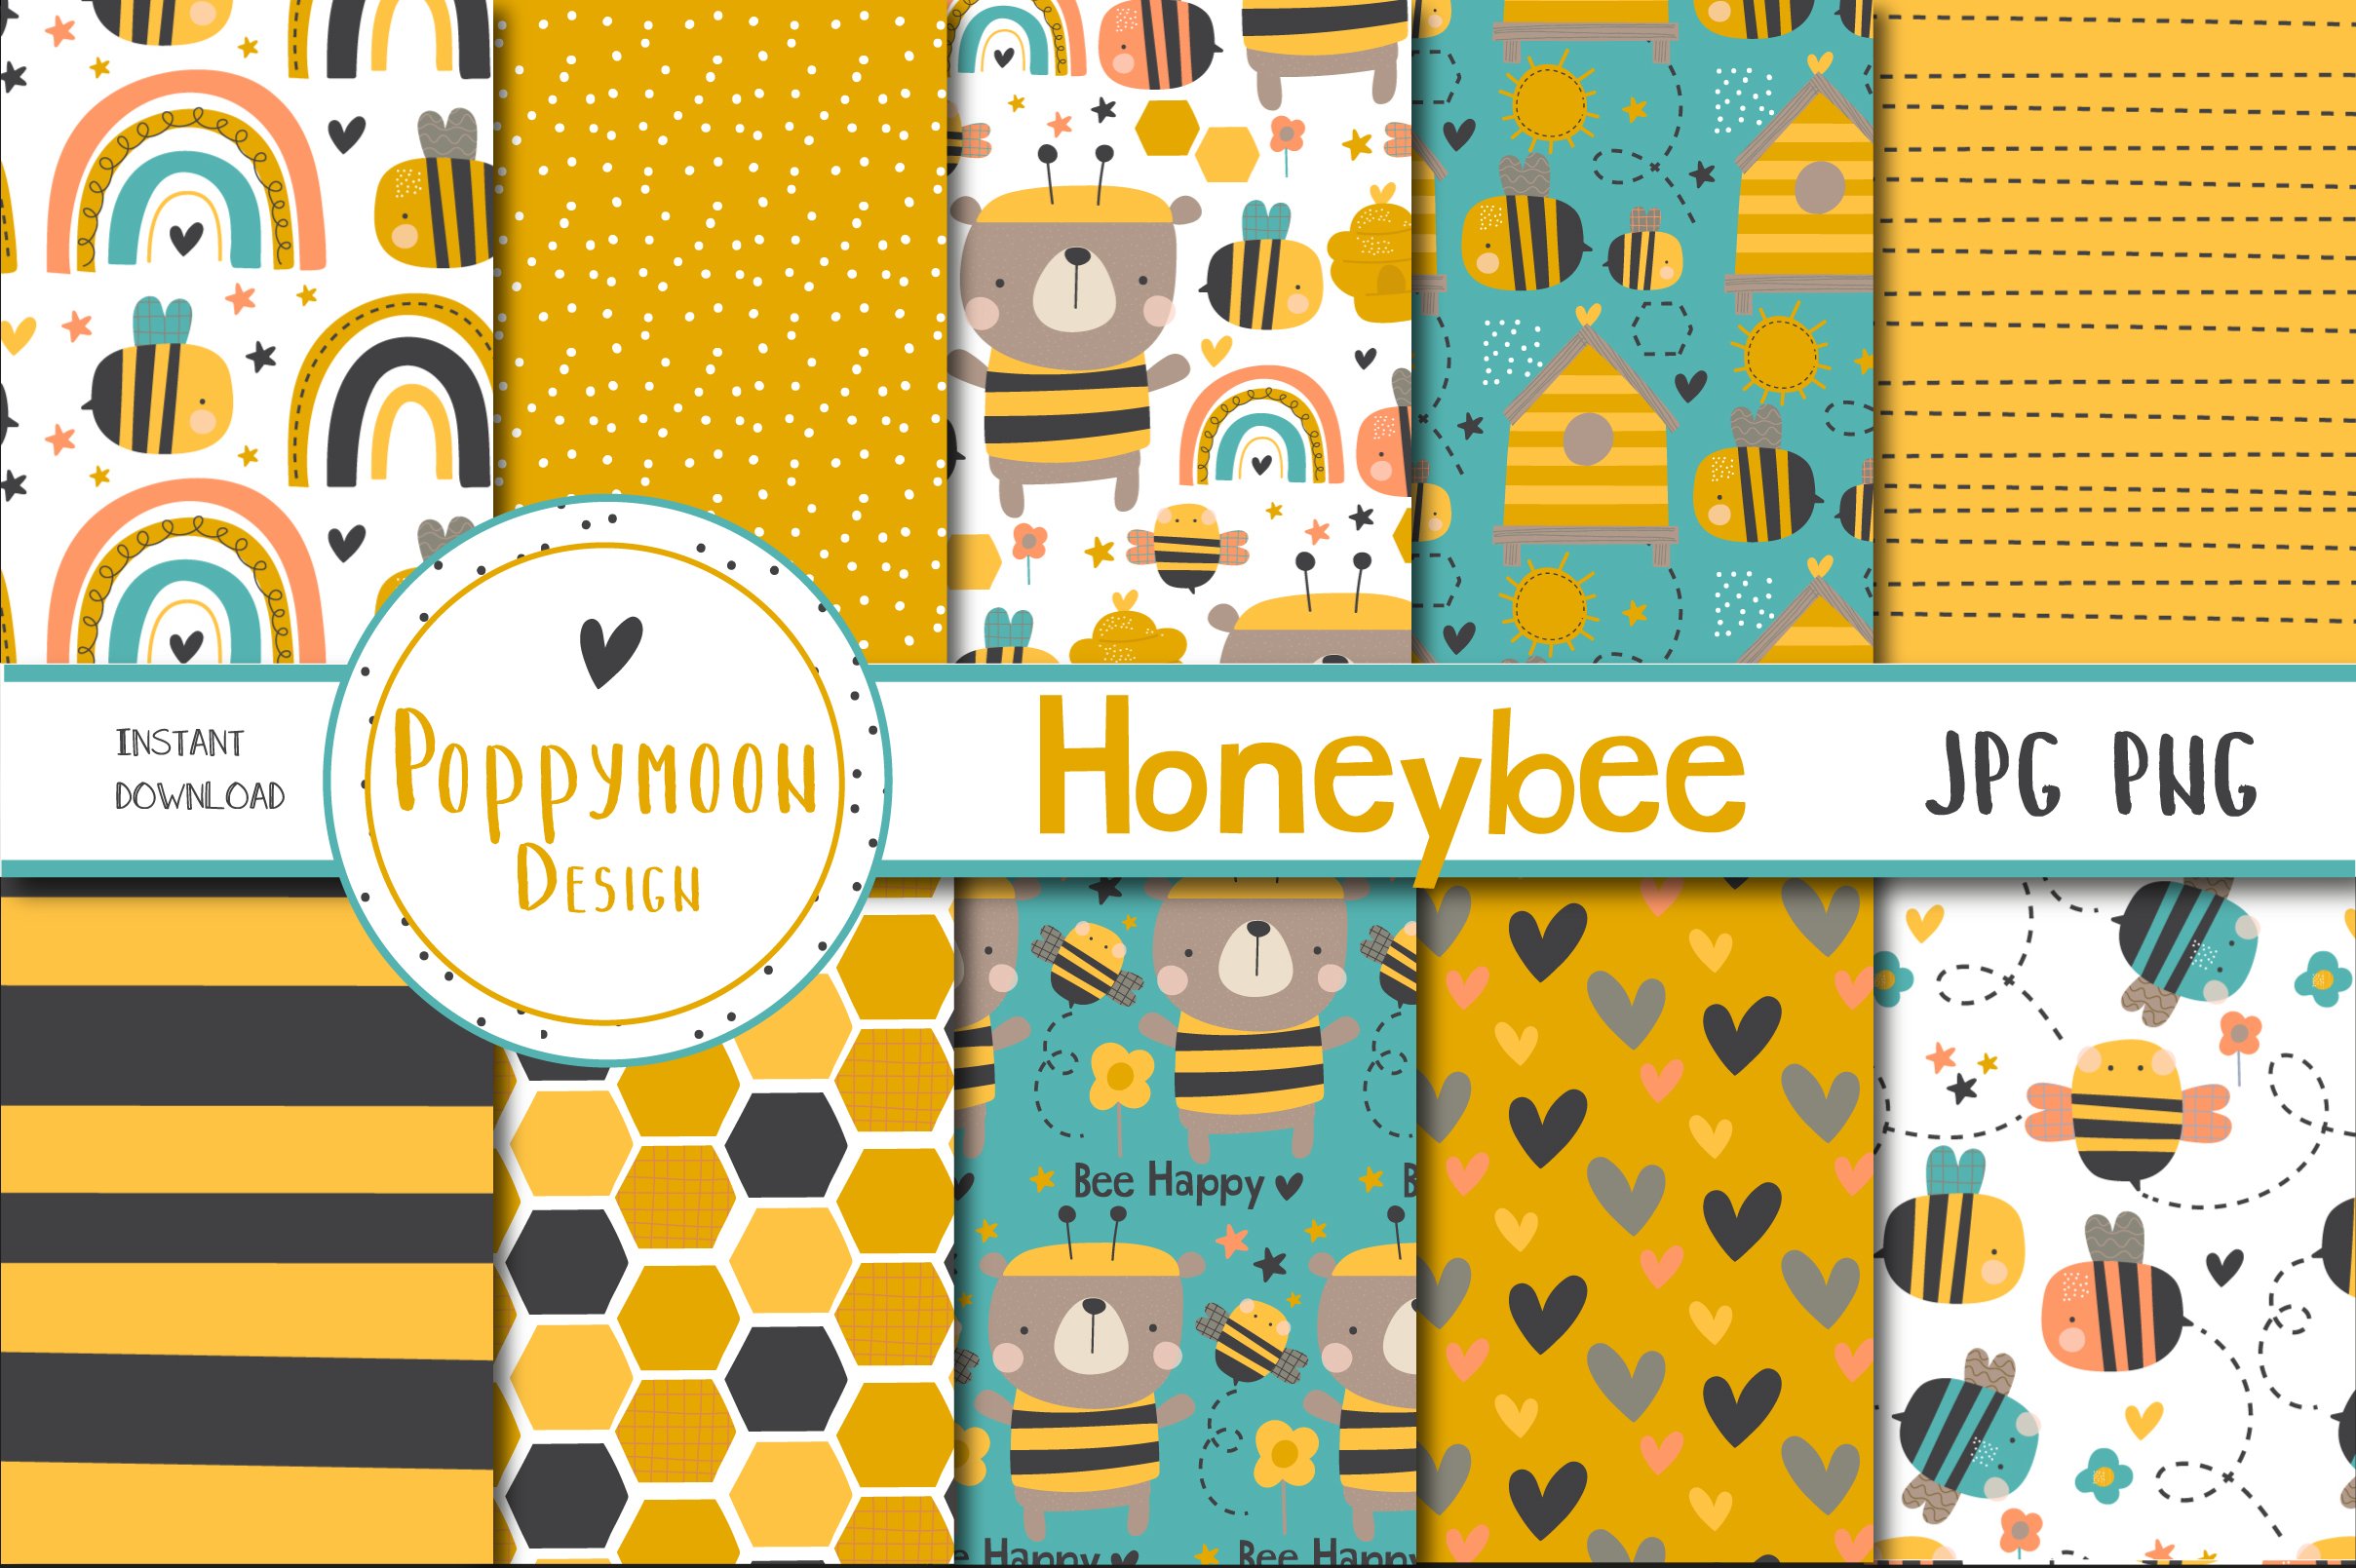 HoneyBee paper set cover image.